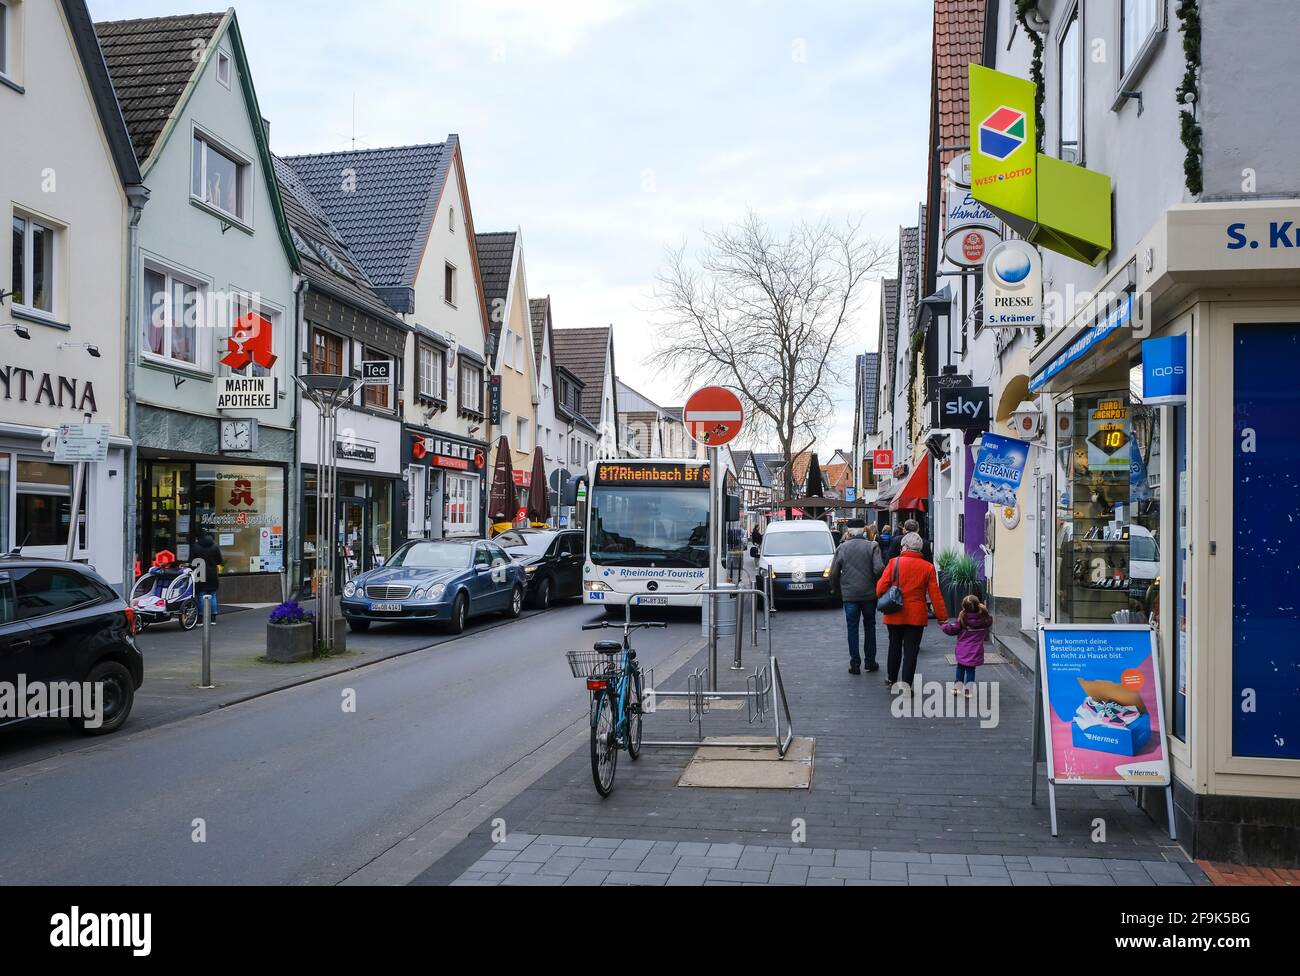 Rheinbach, North Rhine-Westphalia, Germany - Main street in times of Corona pandemic, Rheinbach participates in Corona study by Hendrik Streeck, the t Stock Photo